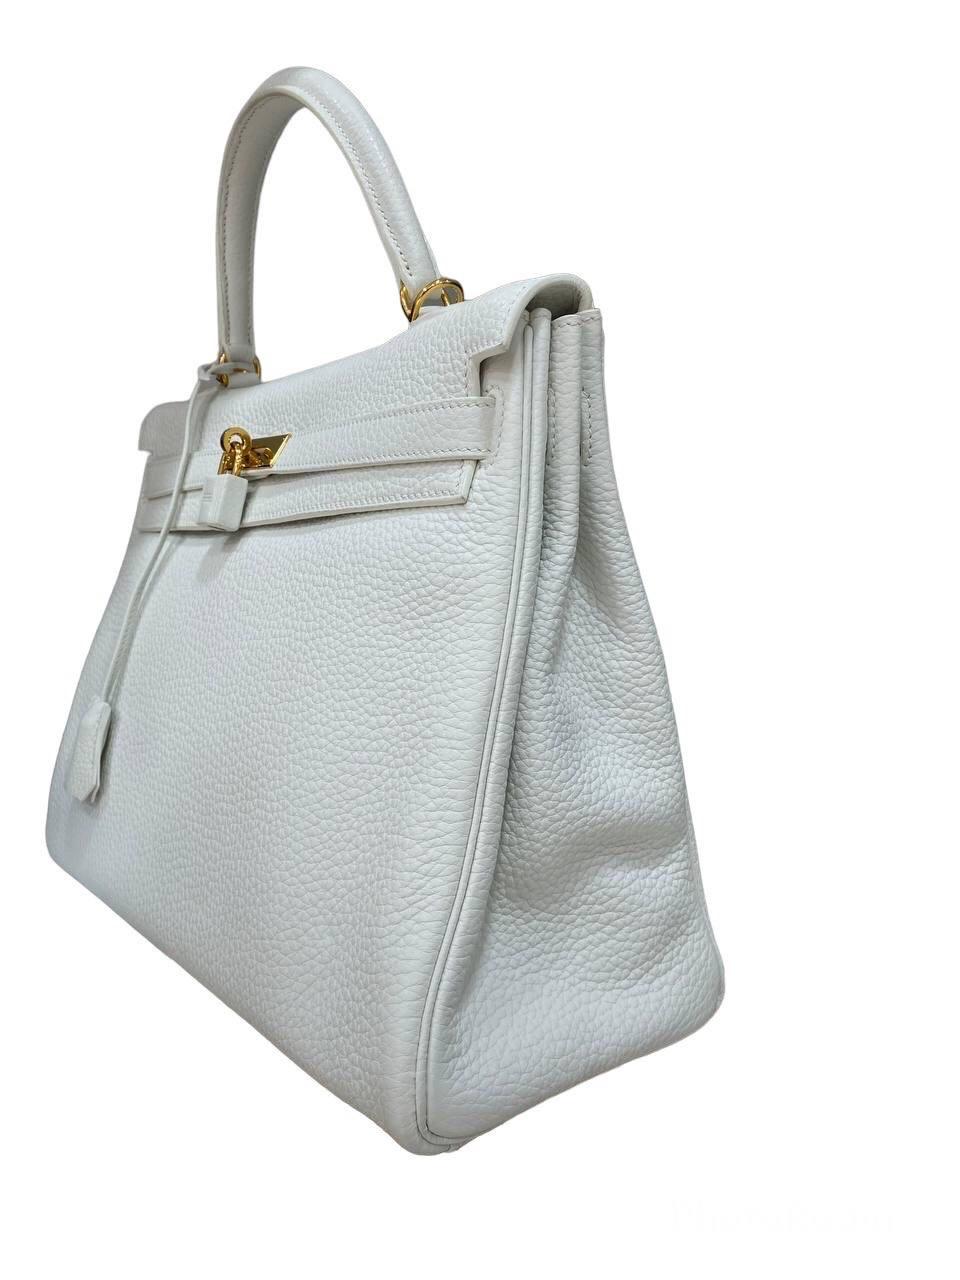 Hermes Kelly 35 White Togo Top Handle Bag 2